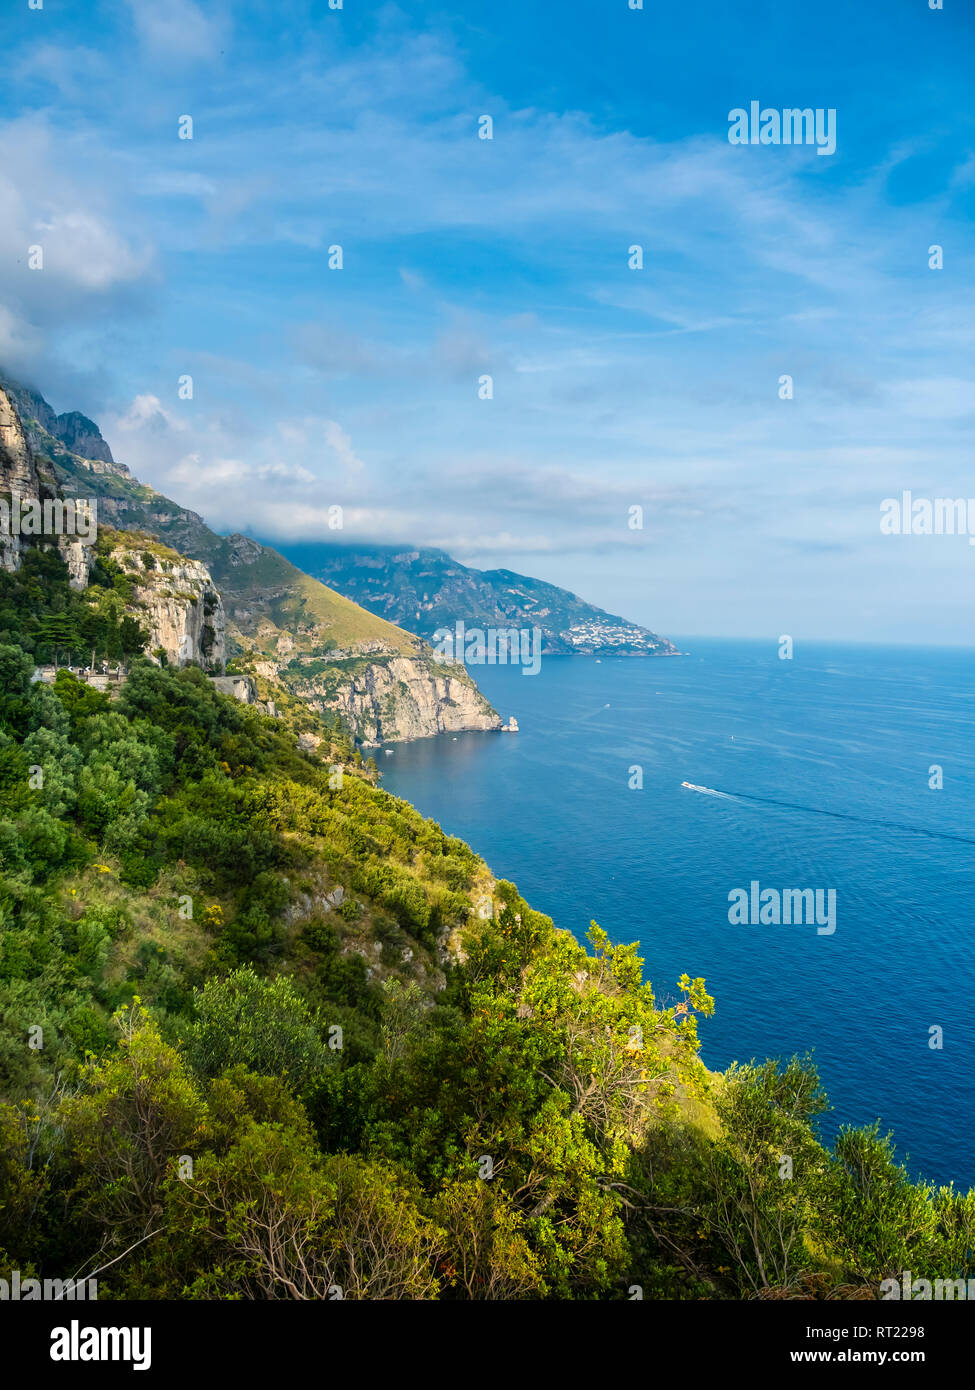 Italy, Campania, Gulf of Salerno, Sorrent, Amalfi Coast, Positano, cliff coast Stock Photo